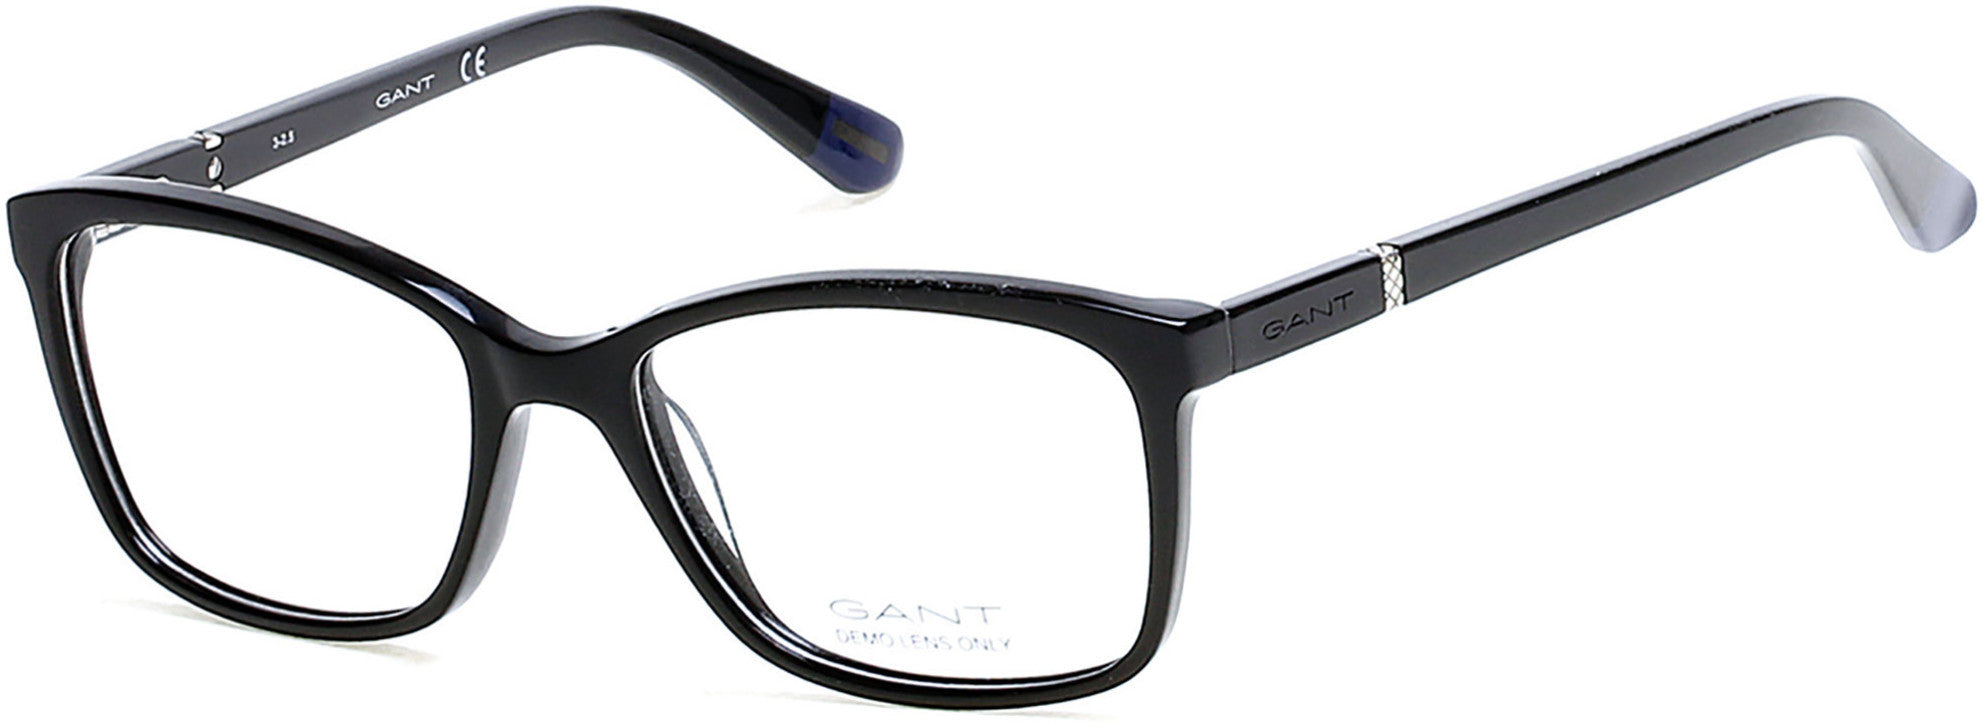 Gant GA4070 Geometric Eyeglasses 001-001 - Shiny Black